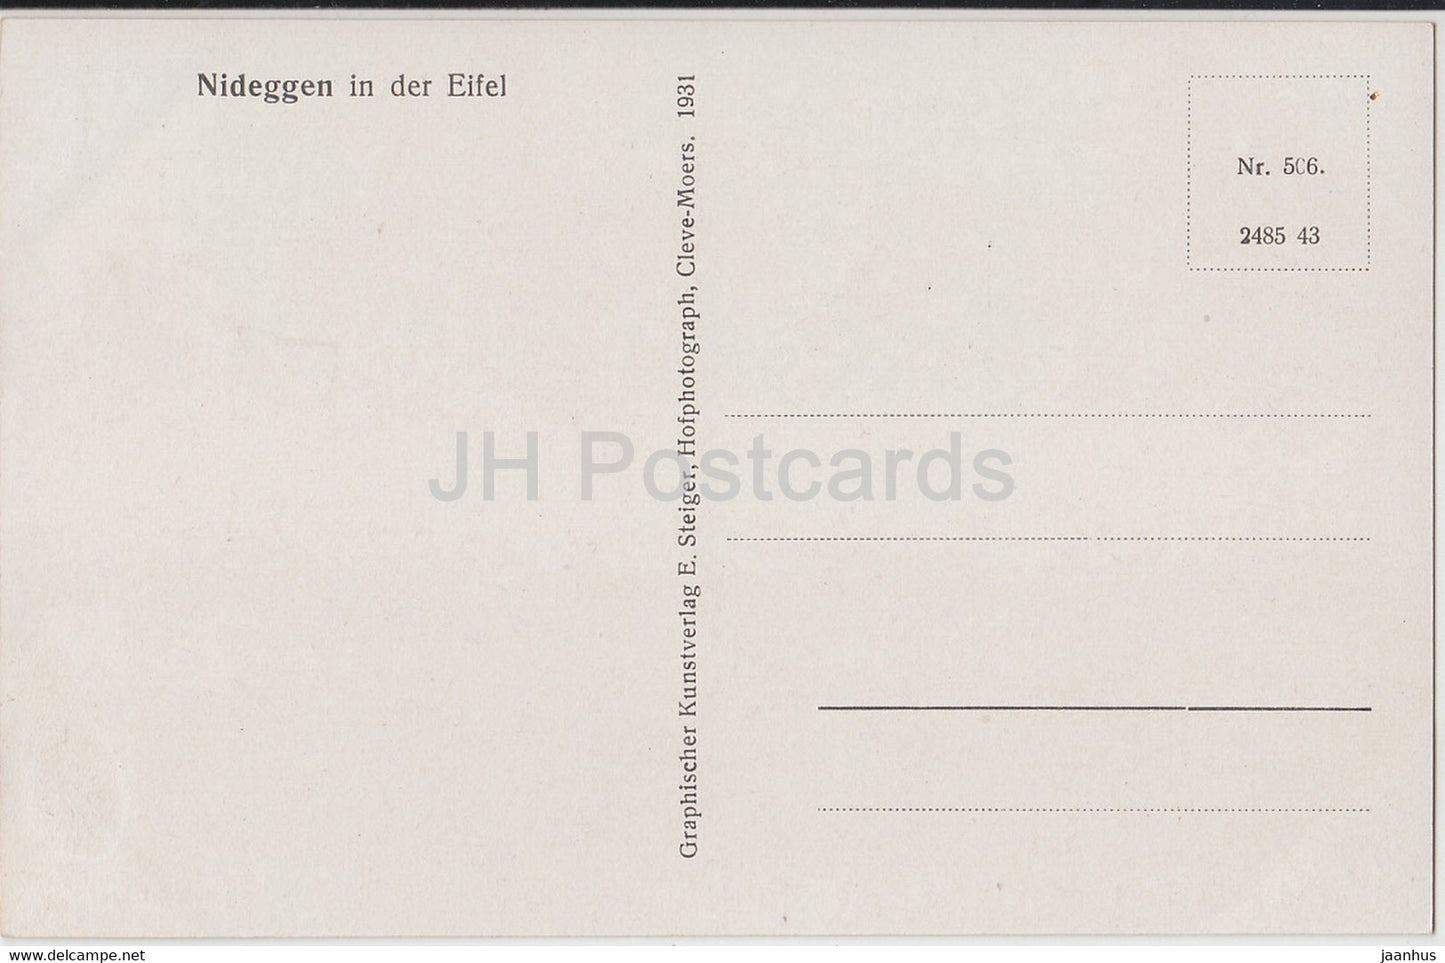 Nideggen in der Eifel - carte postale ancienne - 1931 - Allemagne - inutilisée